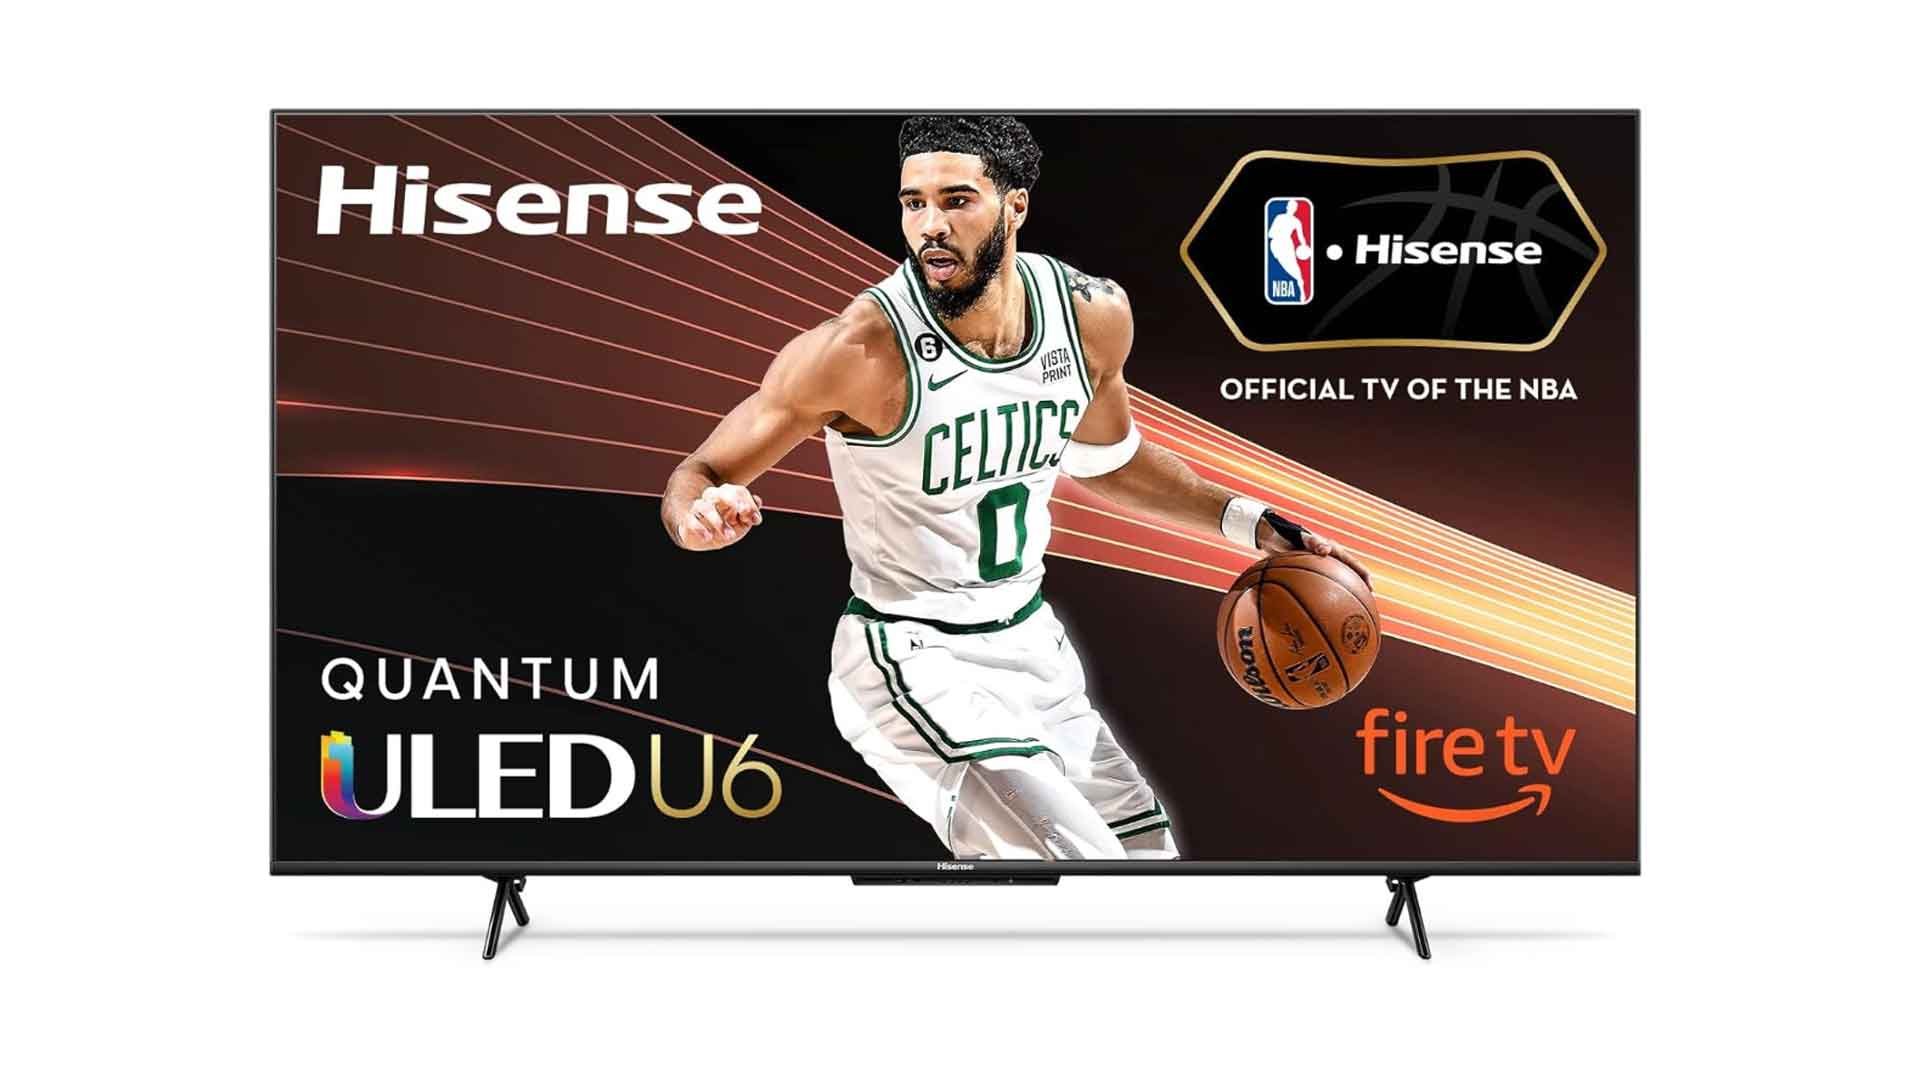 Hisense TV, Hisense U6HF series, Hisense U6HF, 75 inch TV, QLED TV, 4K TV, best 75 inch TV, home appliances, best TV deals, TV deals amazon, best 75 inch TV deals, tech deals